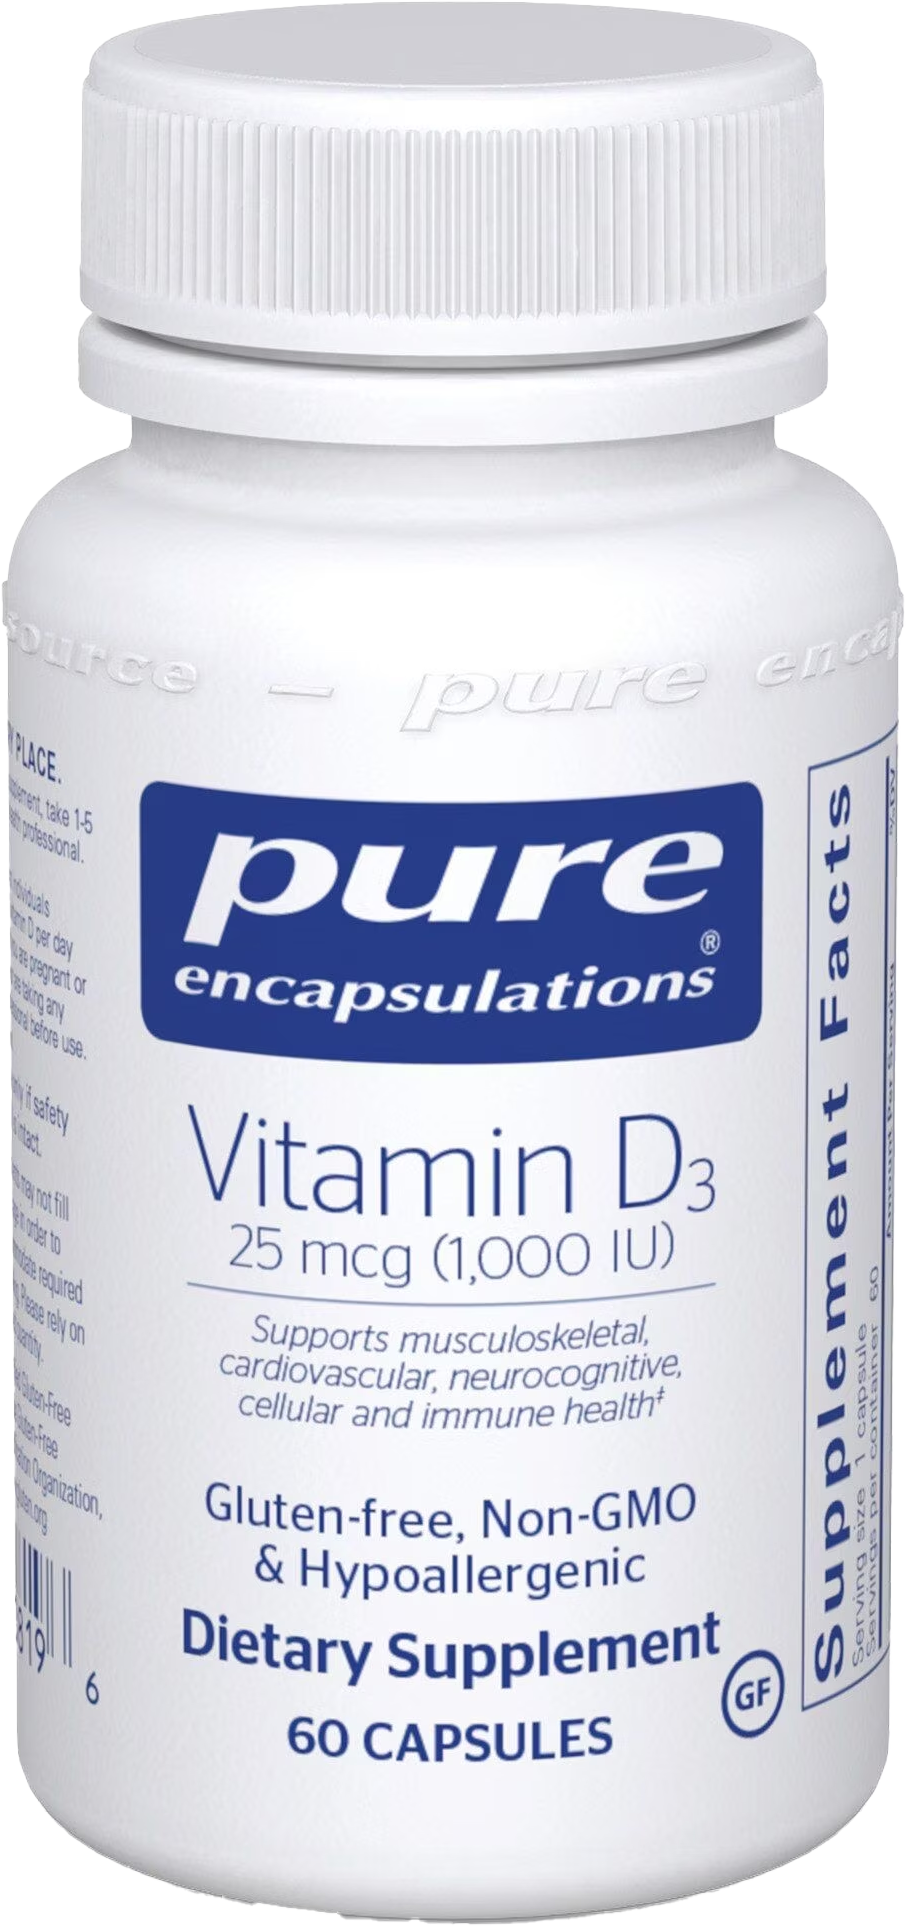 Vitamin D3 1,000 IU 60 ct.